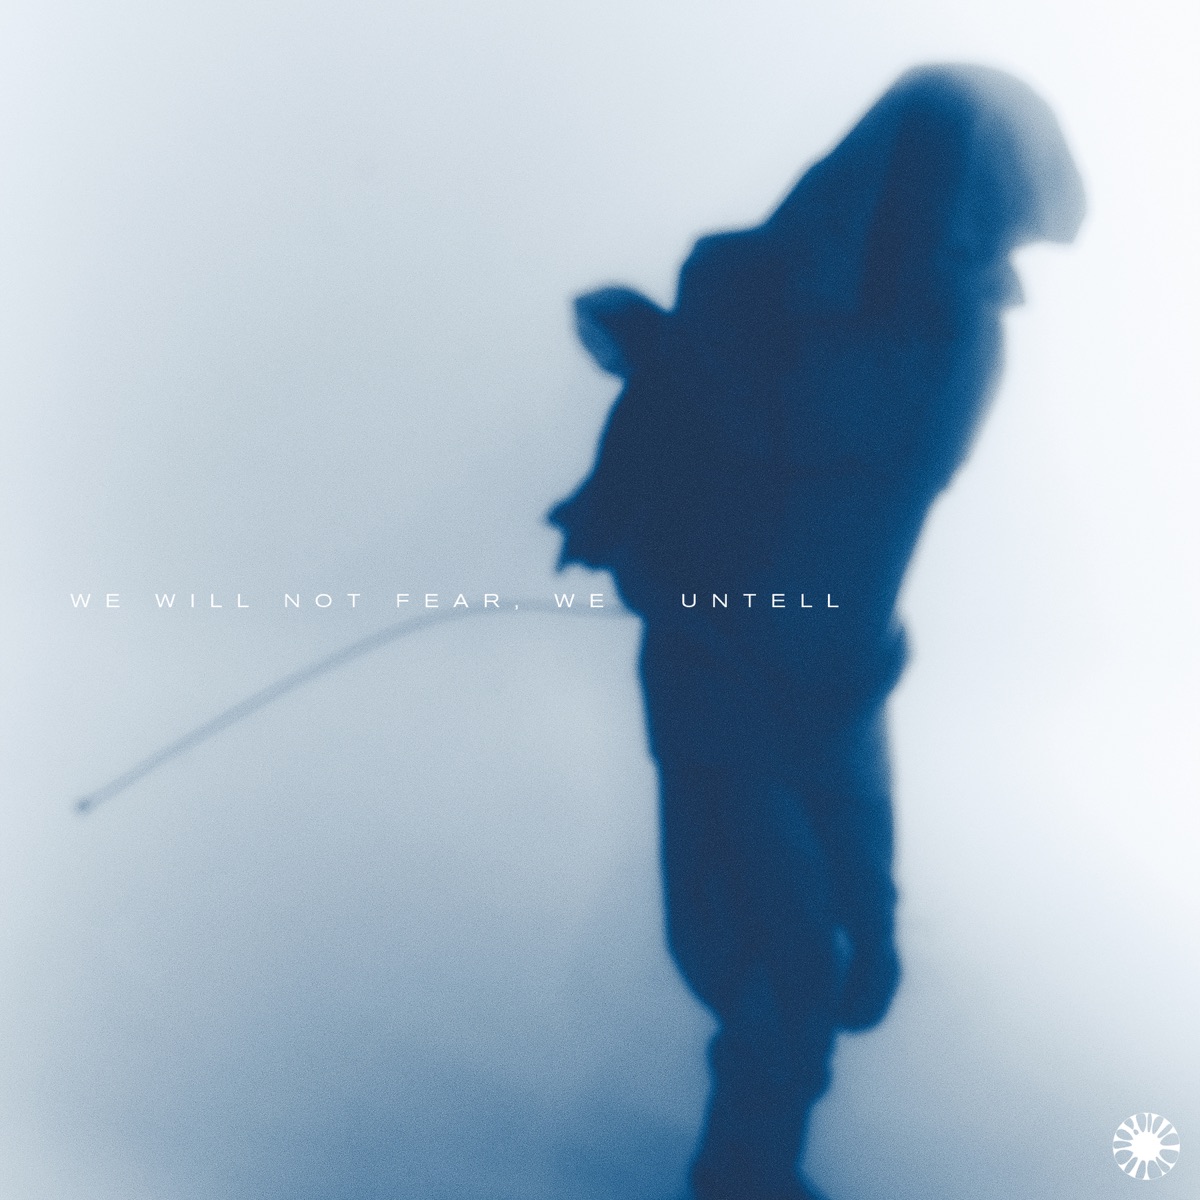 Untell – HUMAN, the album